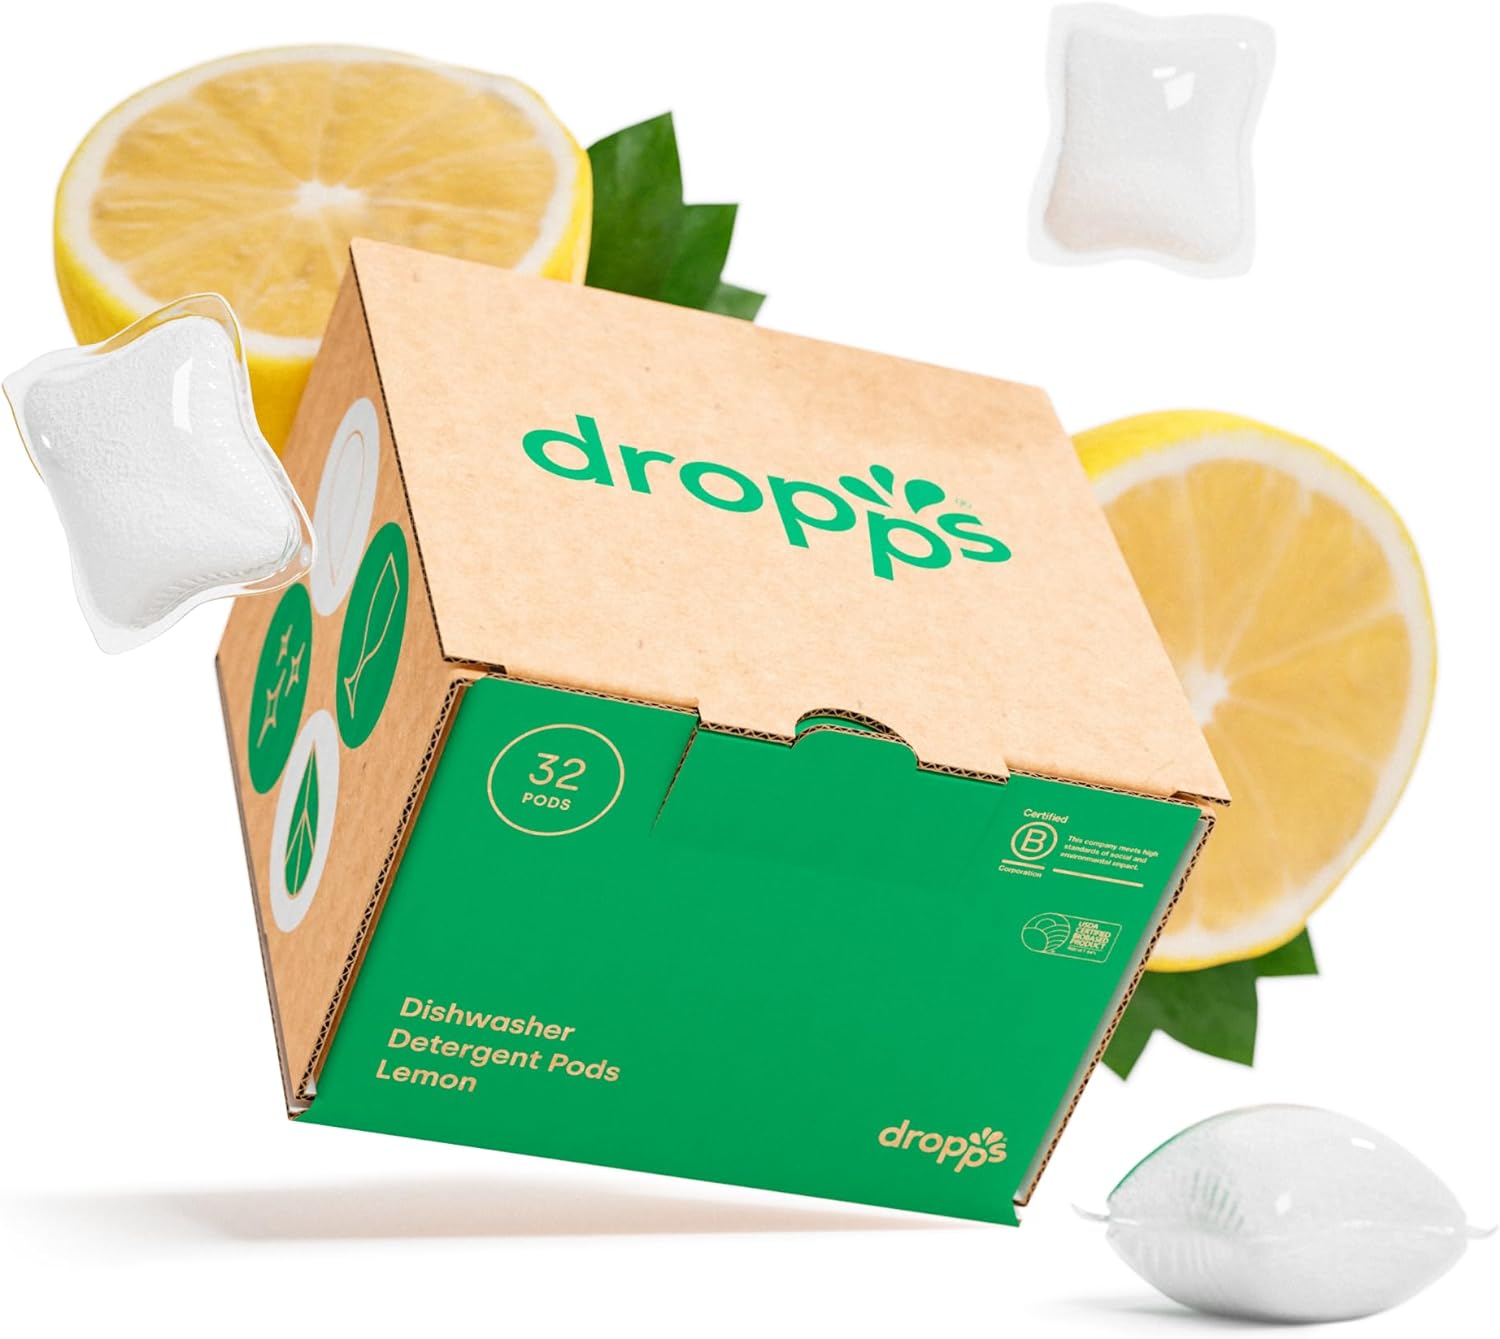 Dropps Dishwasher Detergent Pods: Lemon Review